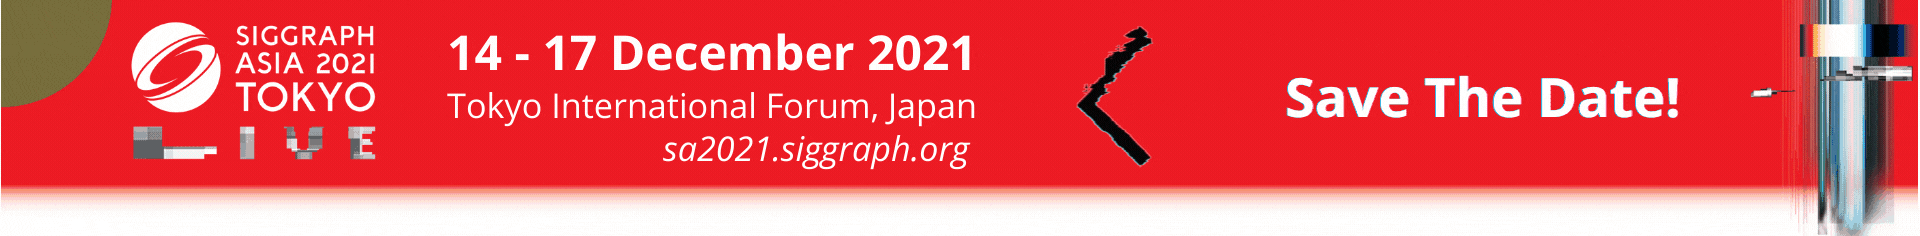 Siggraph Asia 2021 Tokyo